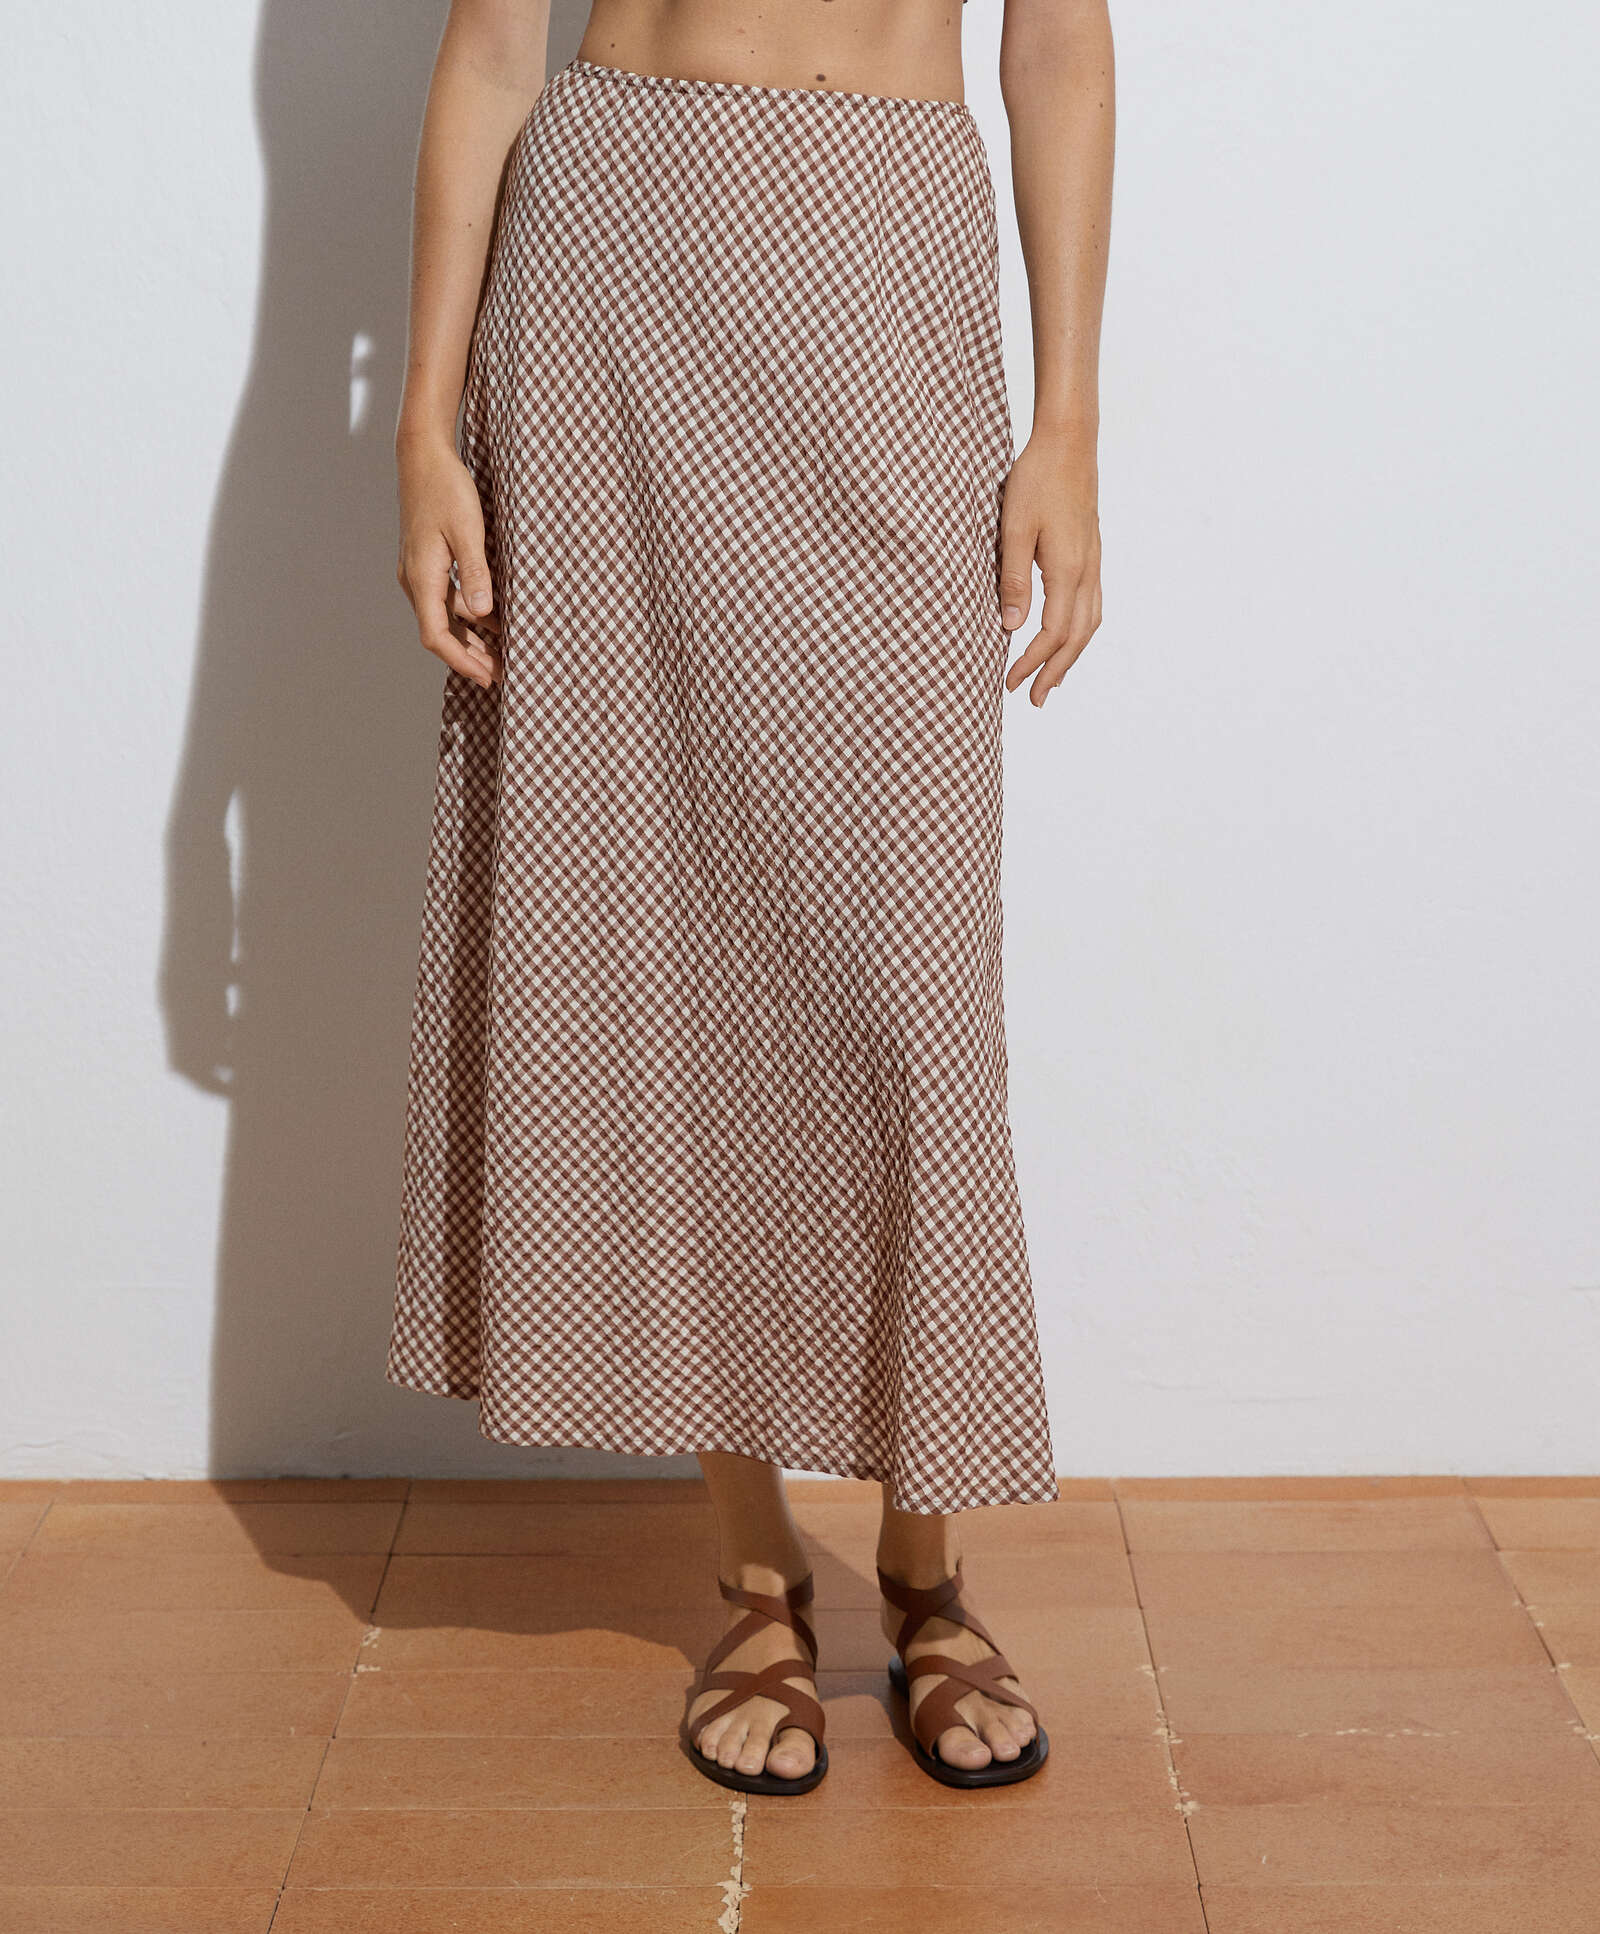 Osyho Long brown & white gingham bias cut skirt, £35.99